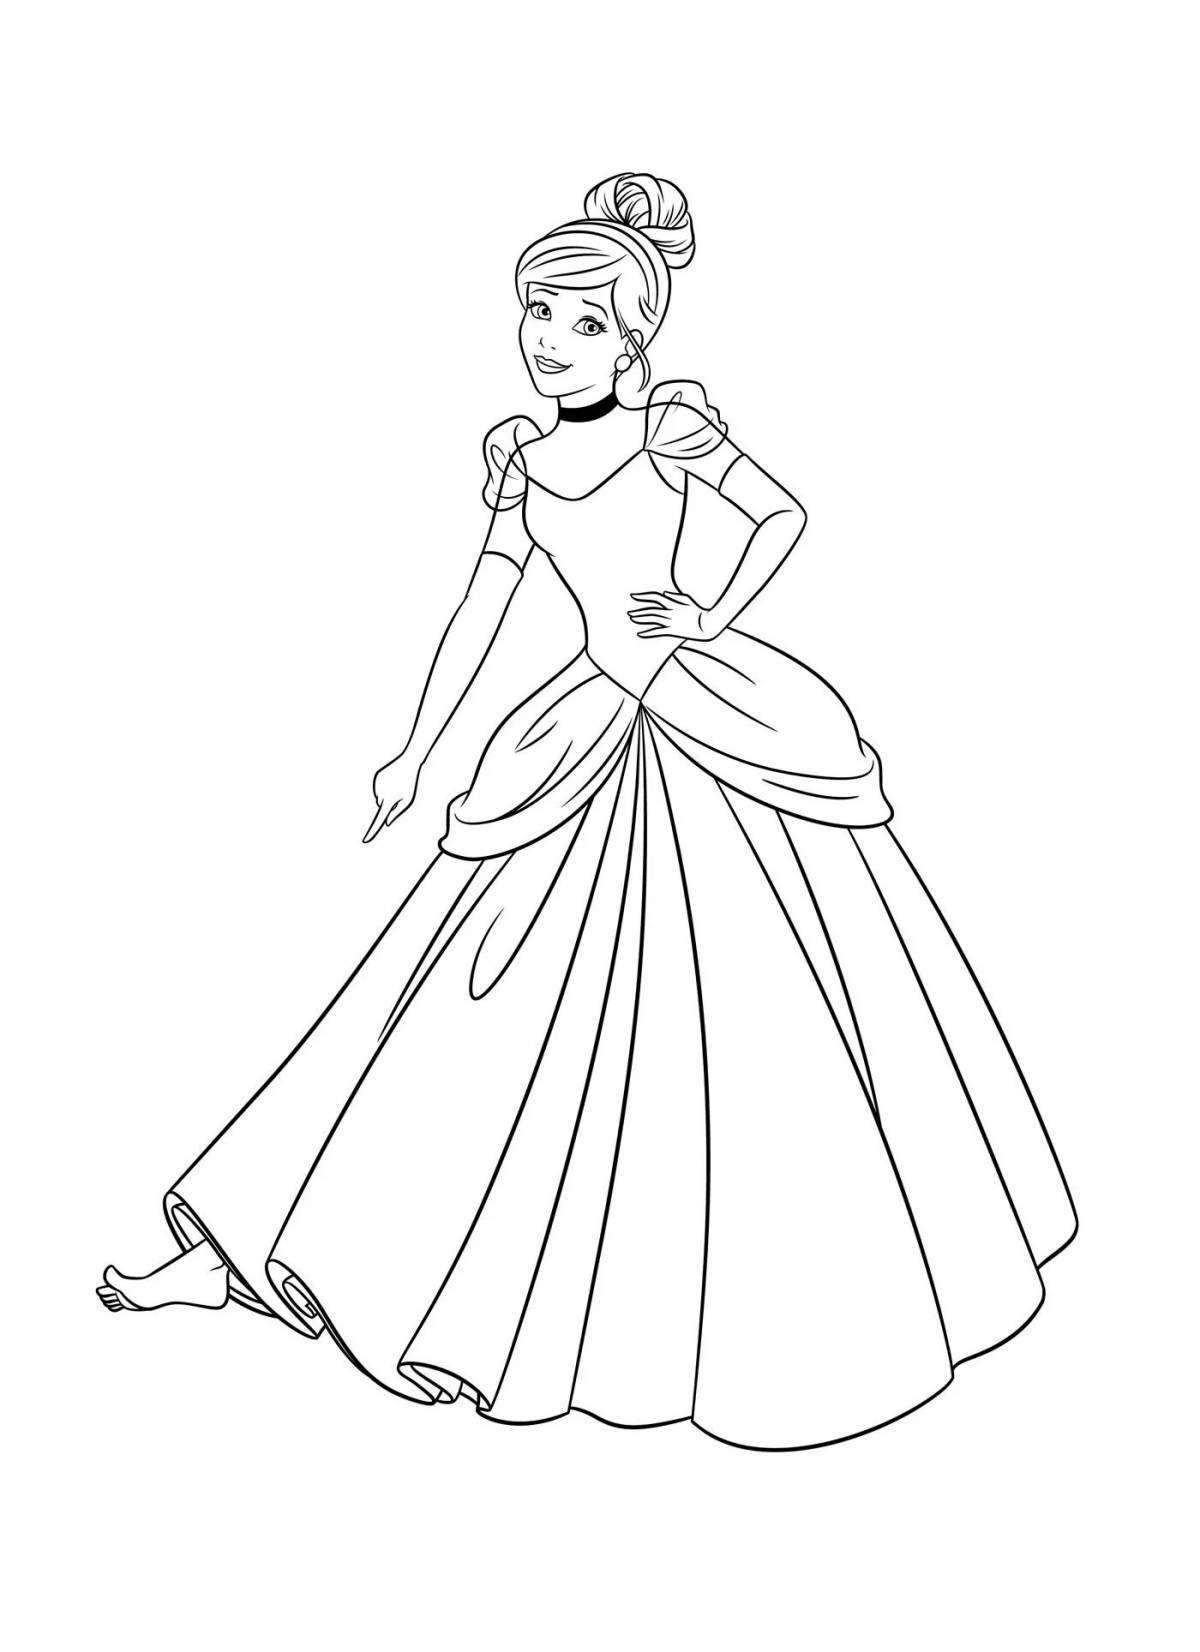 Glorious Cinderella princess coloring book